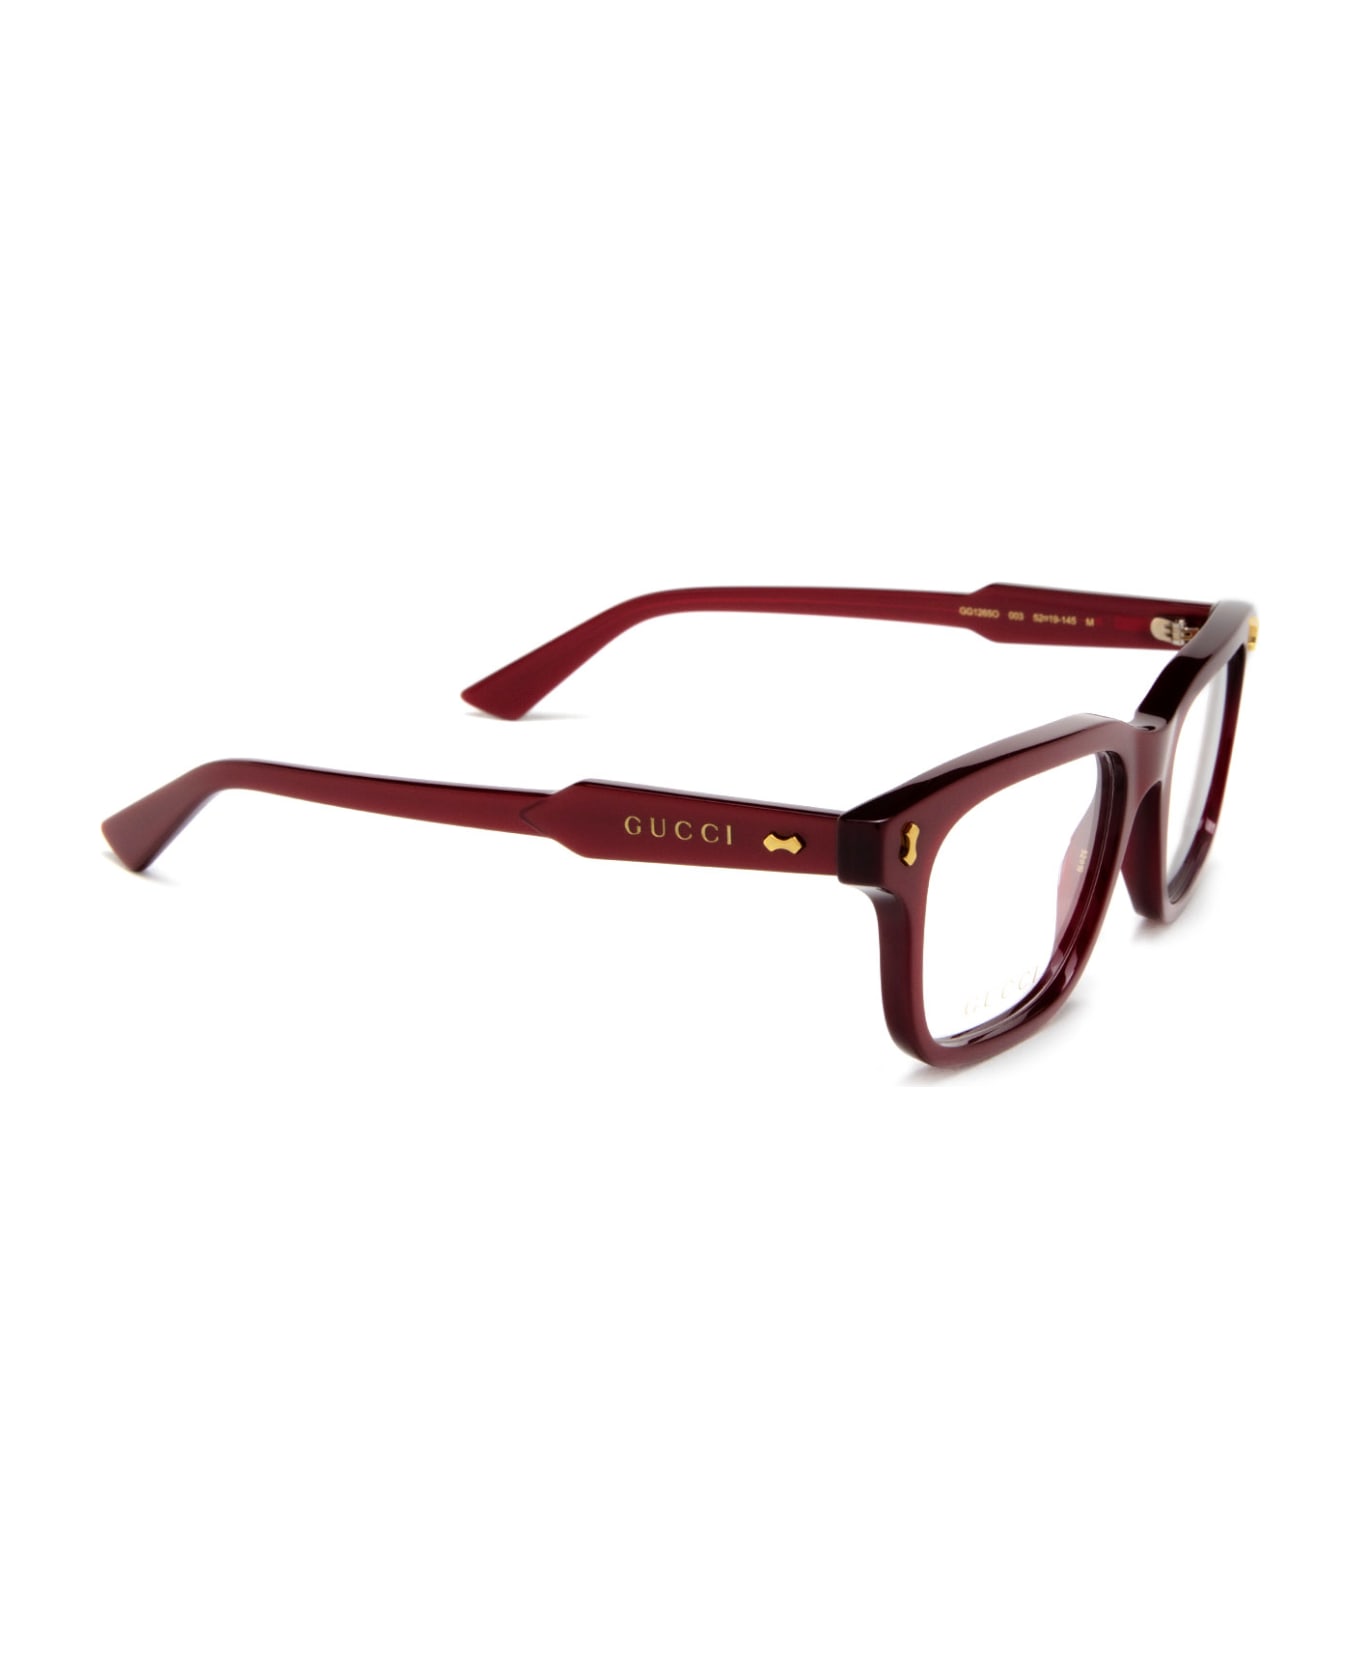 Gucci Eyewear Gg1265o Burgundy Glasses - Burgundy アイウェア